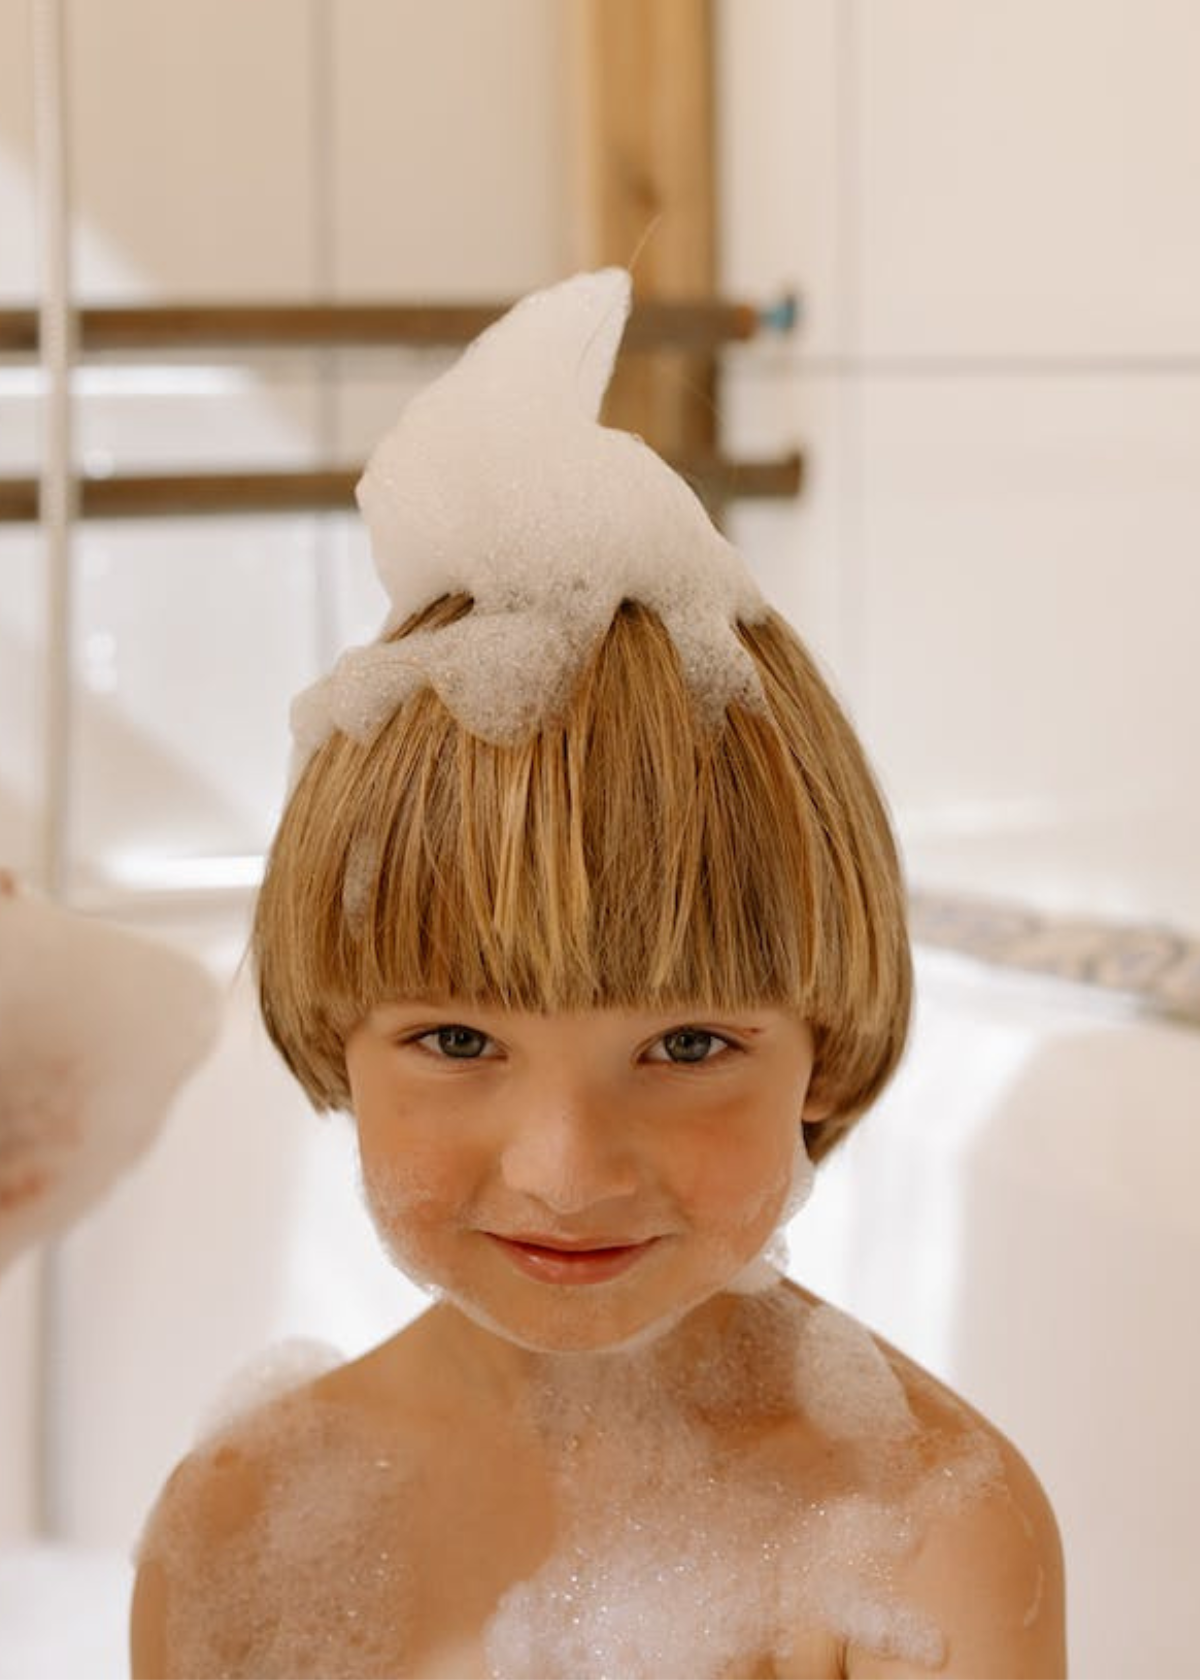 5 Best Shampoo for Kids in 2022